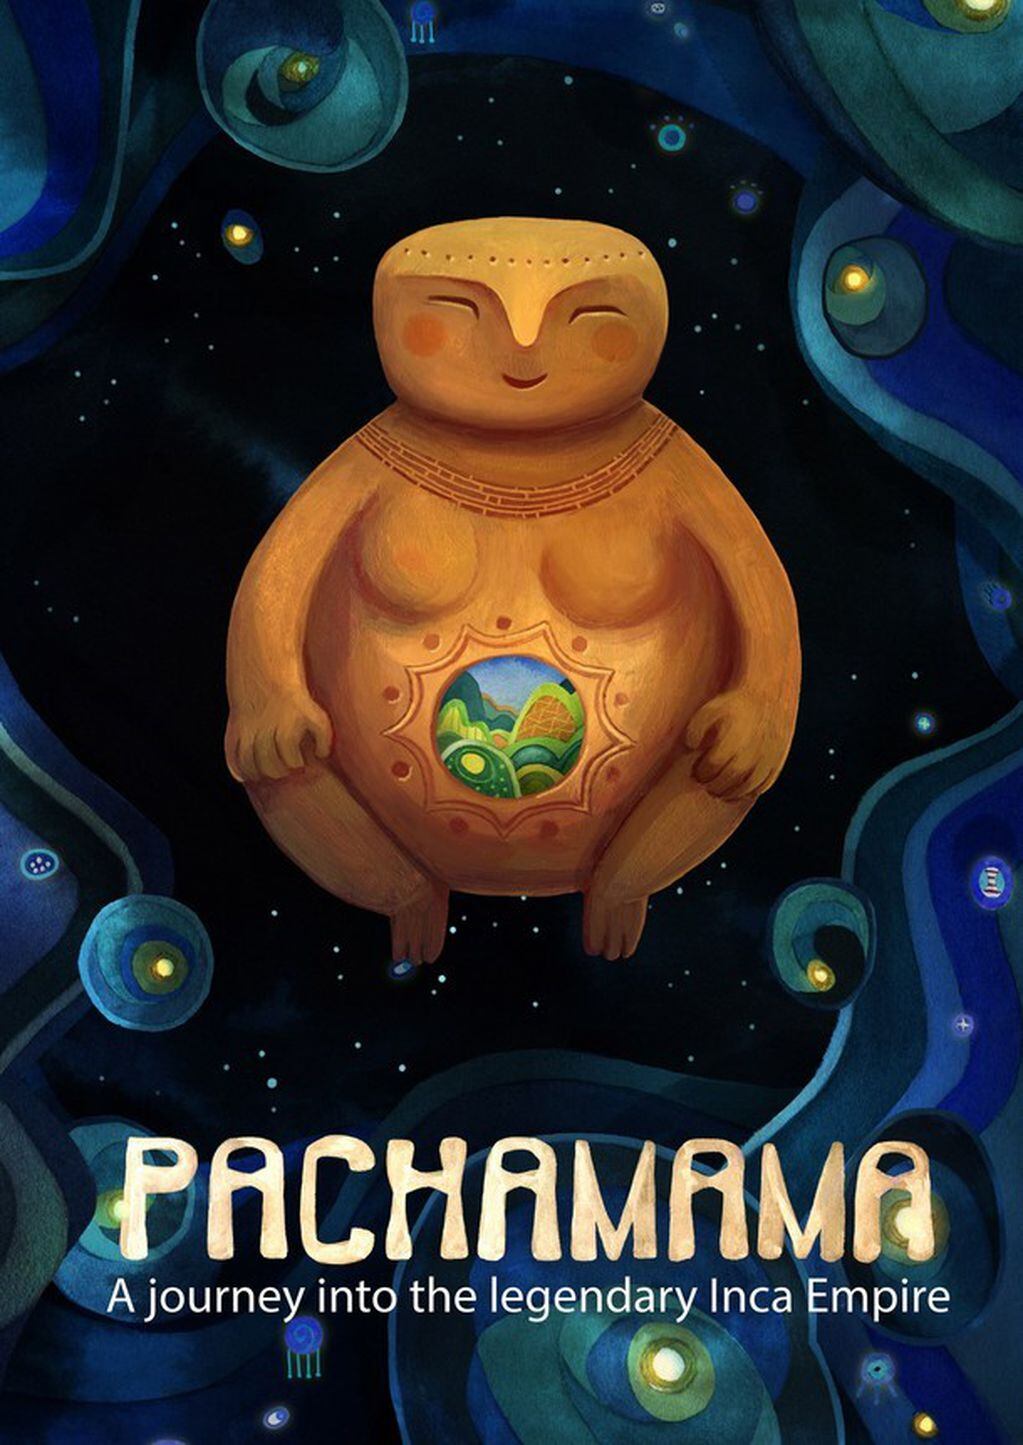 Imagen promocional del film "Pachamama" de Juan Antin